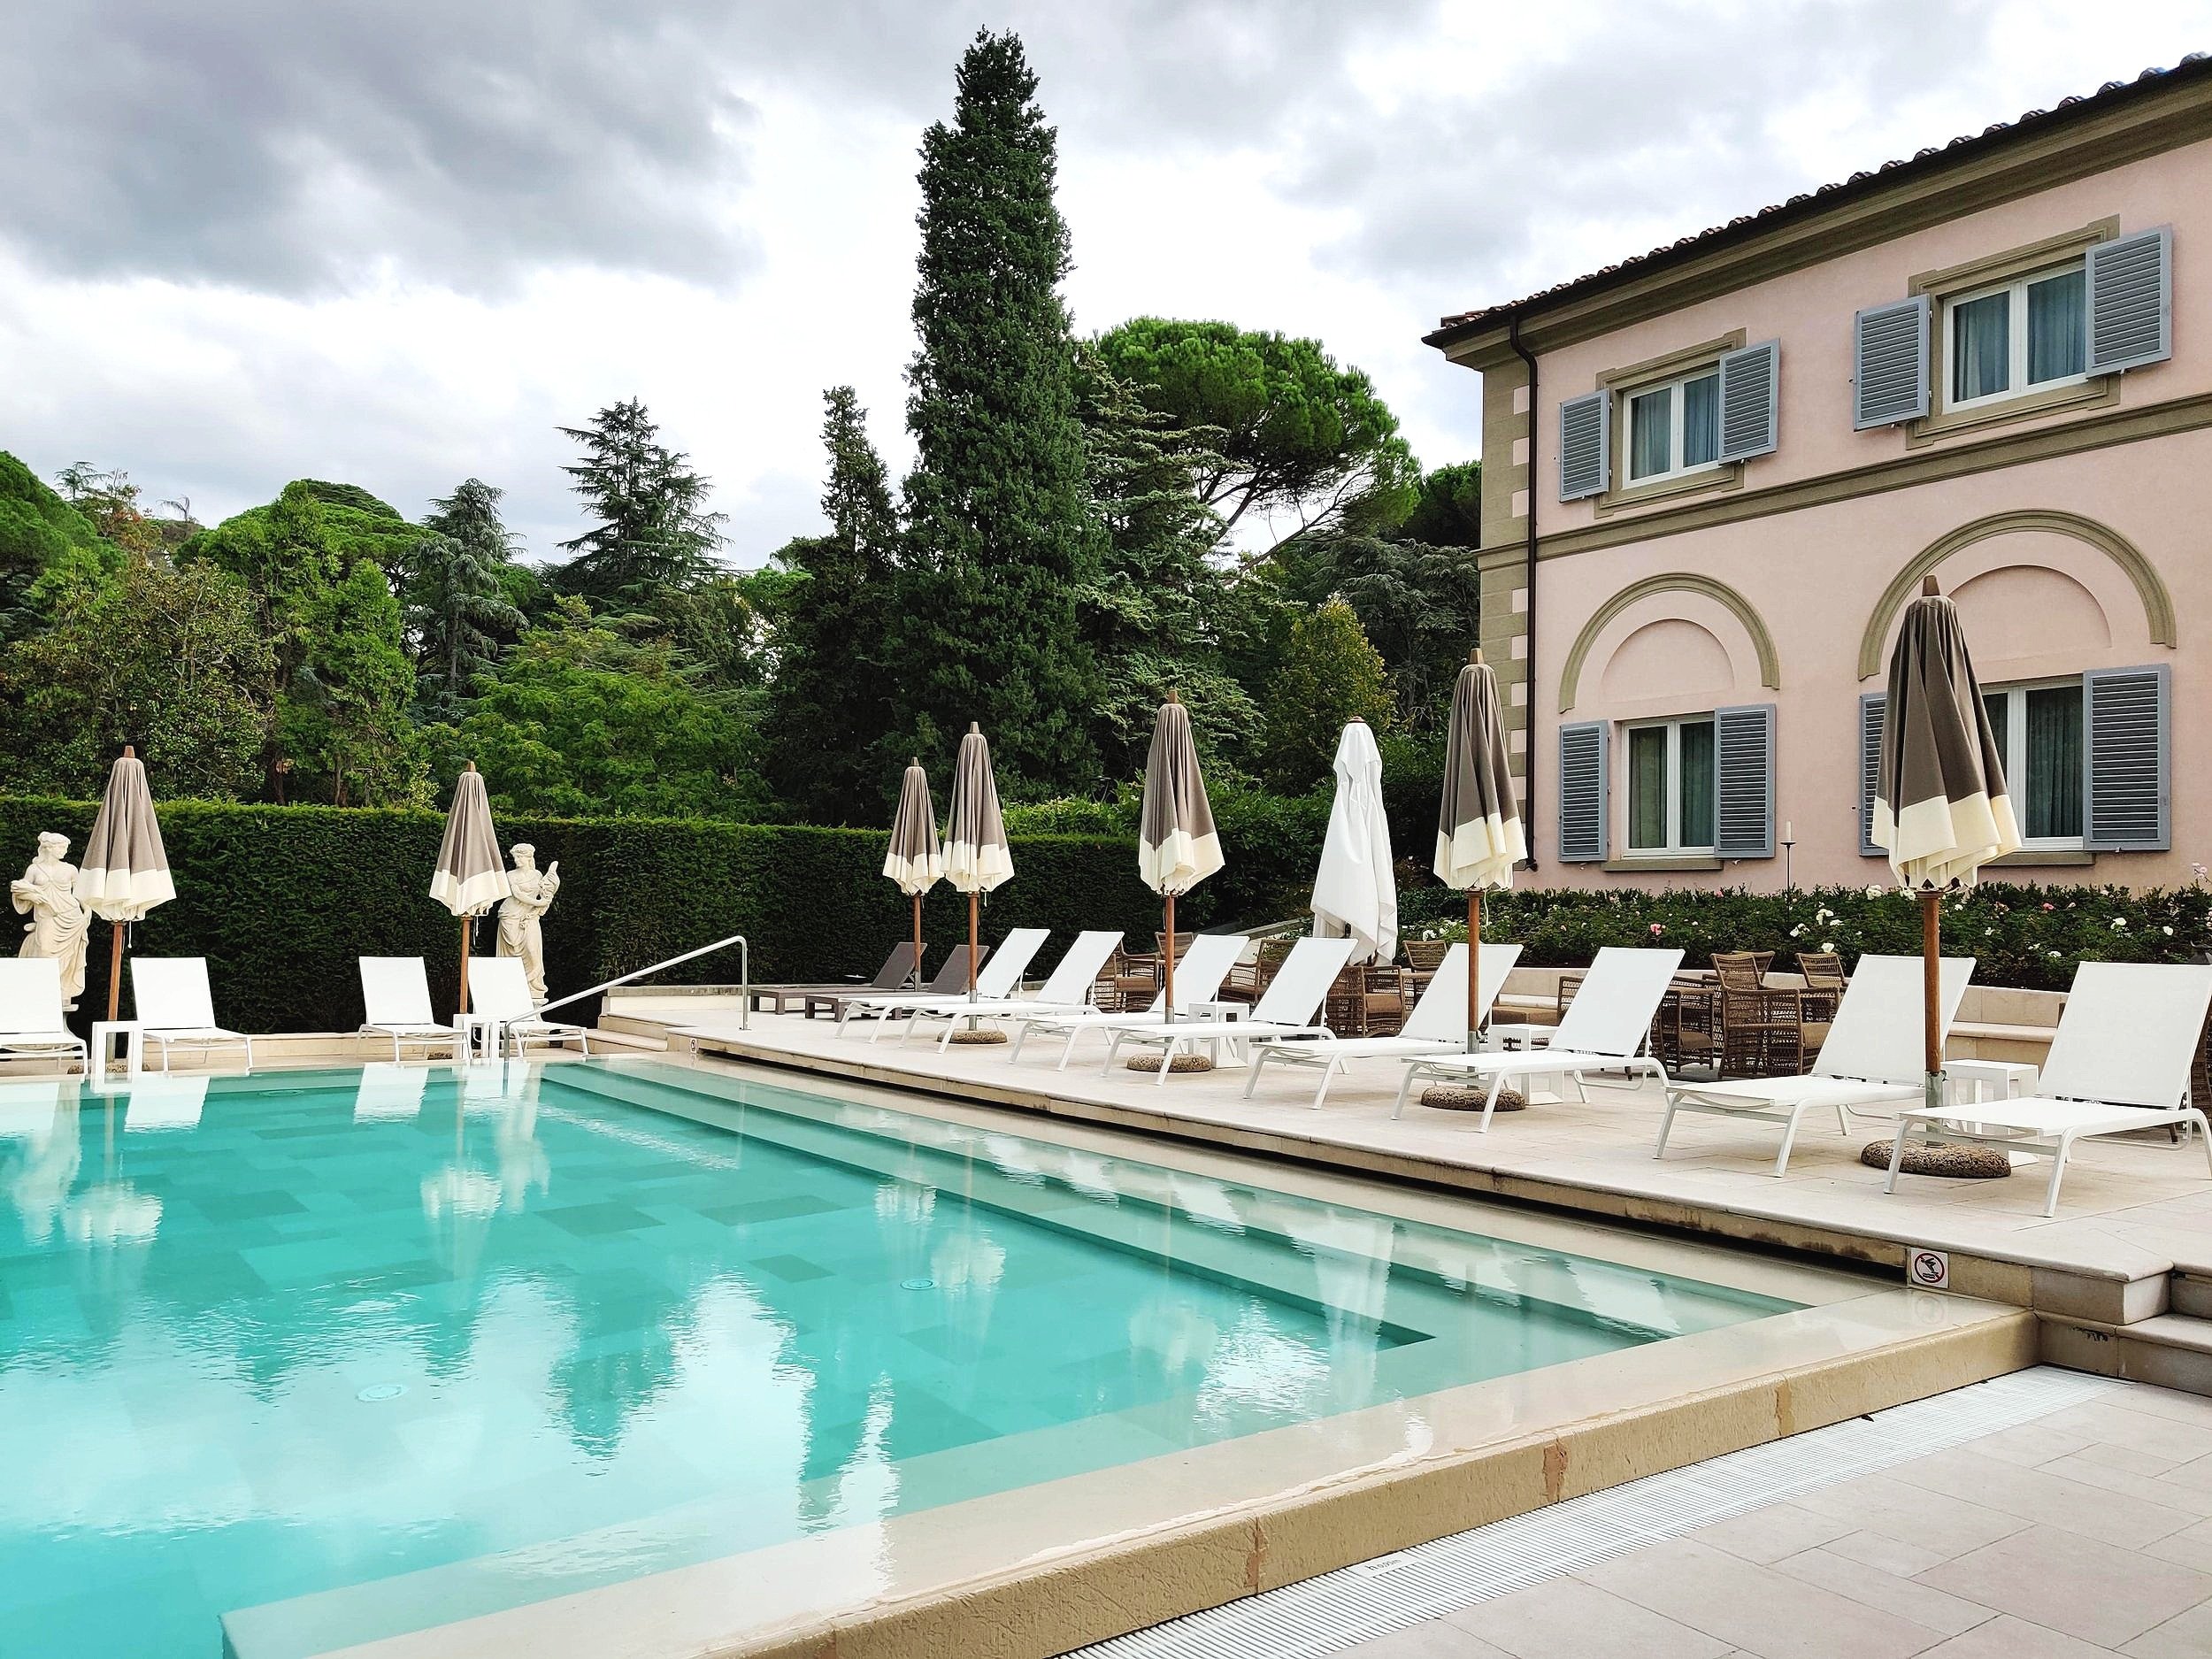 Villa Cora Florence review